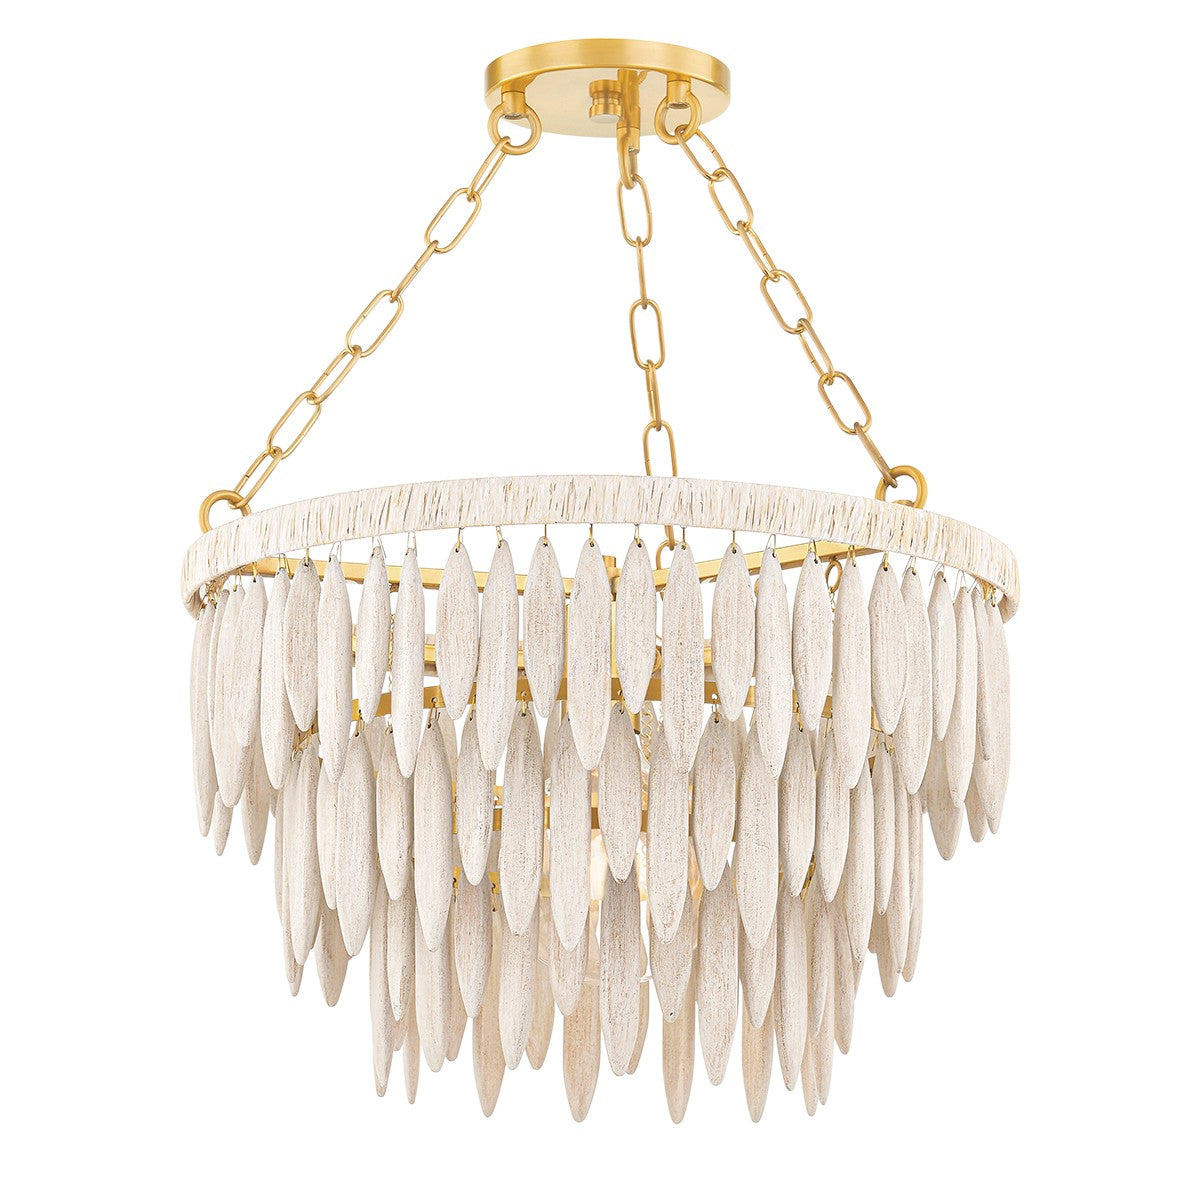 Mitzi - H805701-AGB - One Light Pendant - Tiffany - Aged Brass